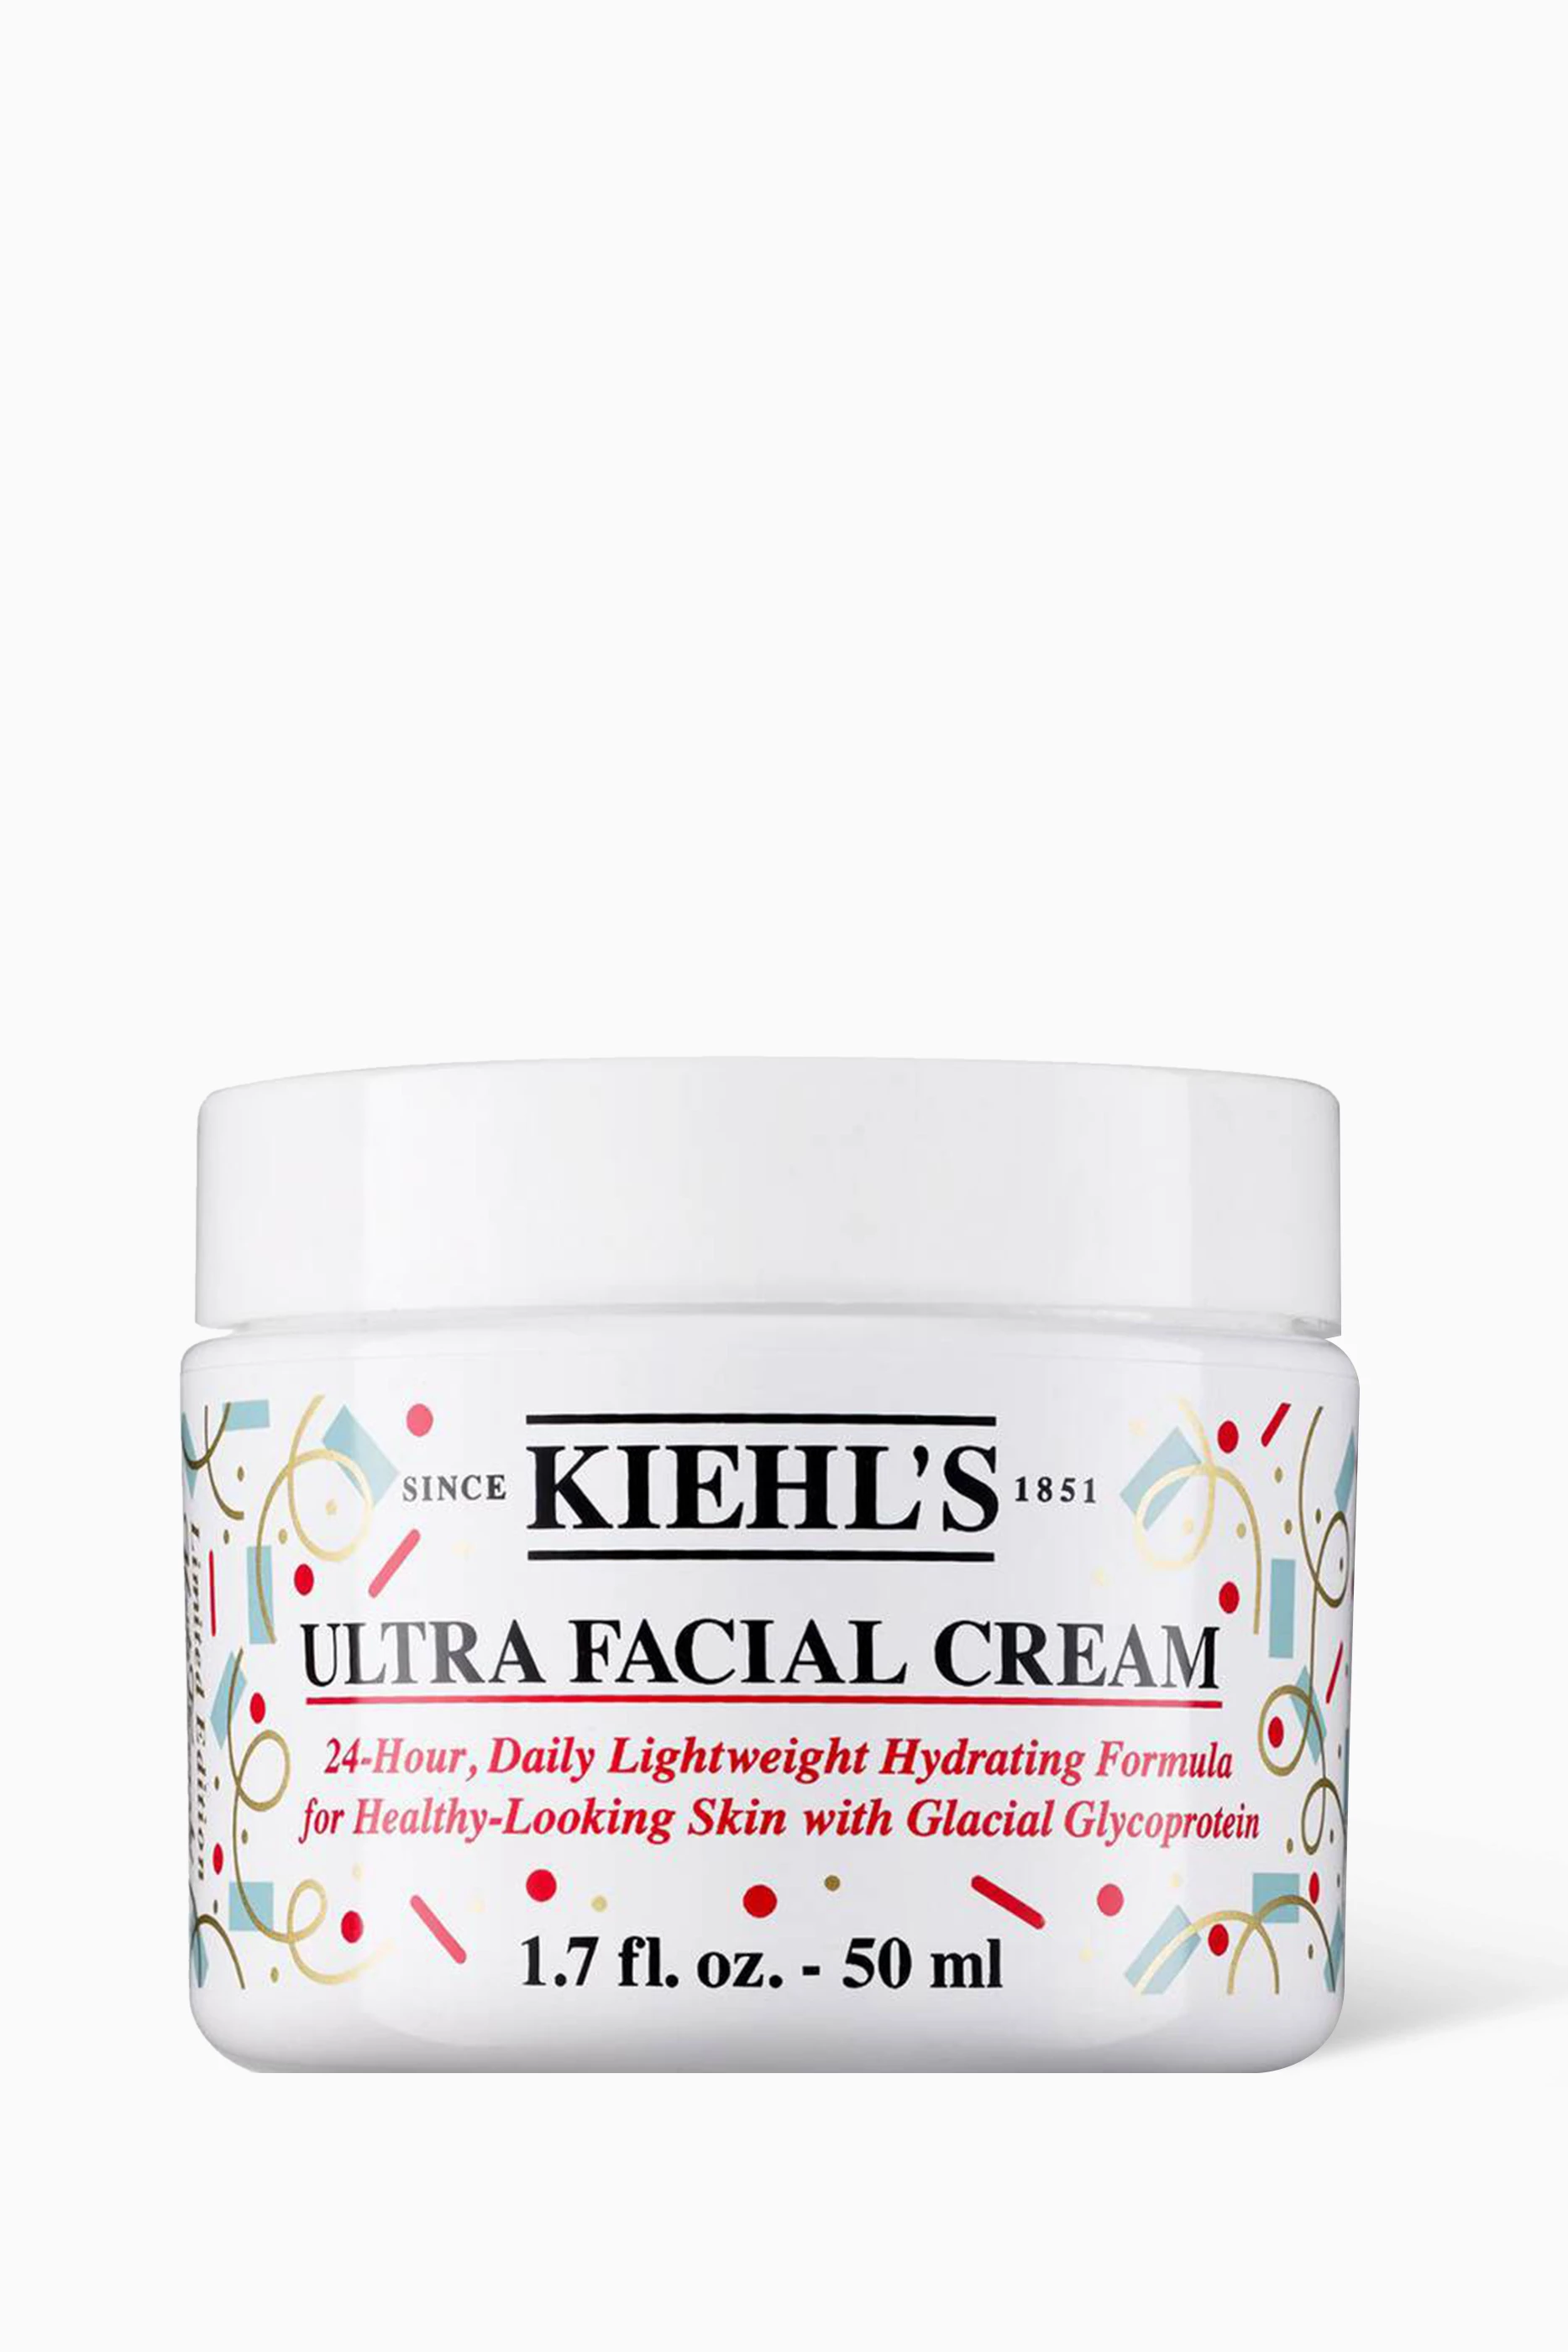 Kiehl's Ultra Facial Cream for Unisex, 1.7 Oz